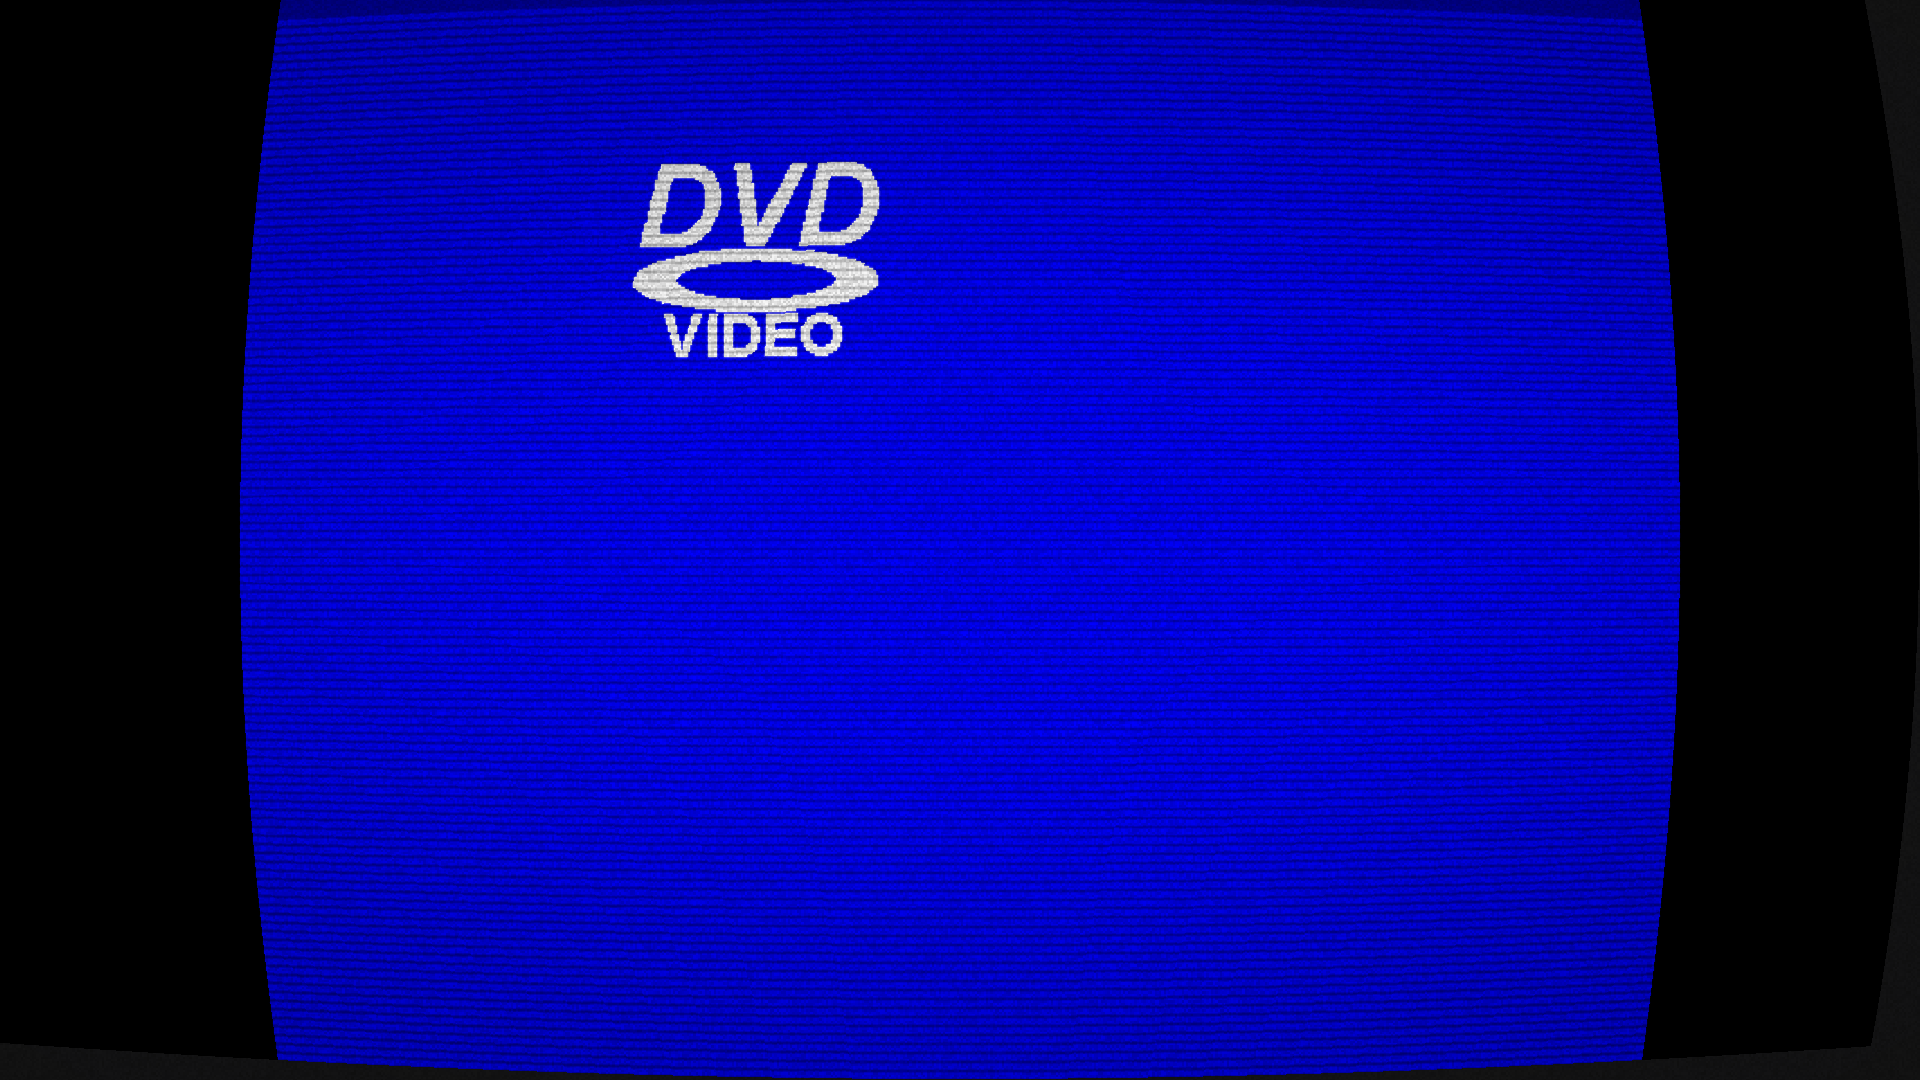 dvd video logo roblox